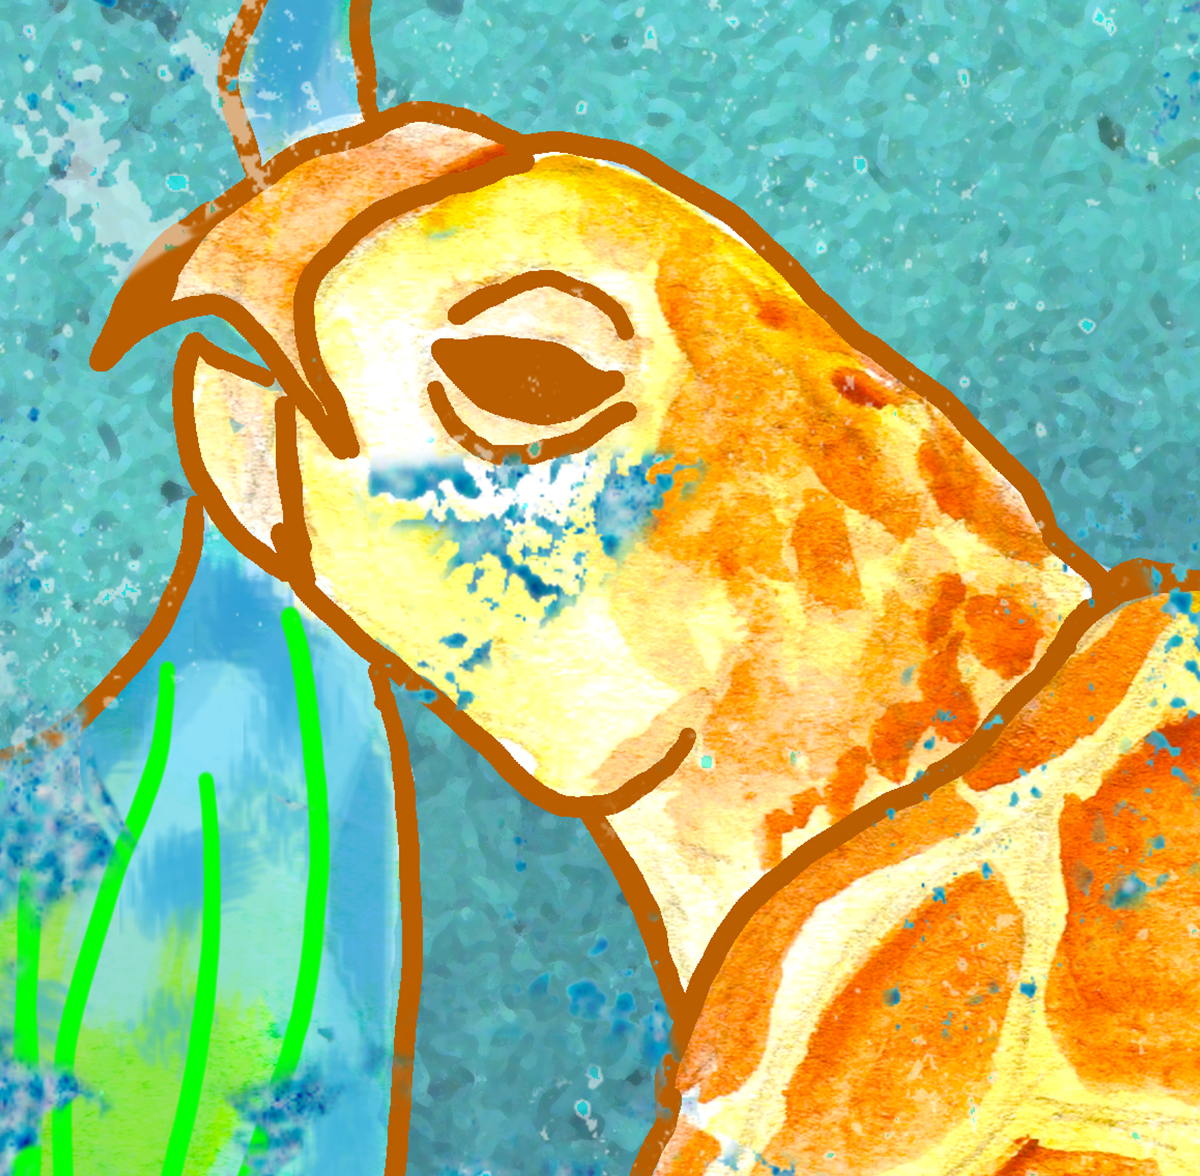 The Turtle and the Mermaid Fine Coastal Art Canvas Print